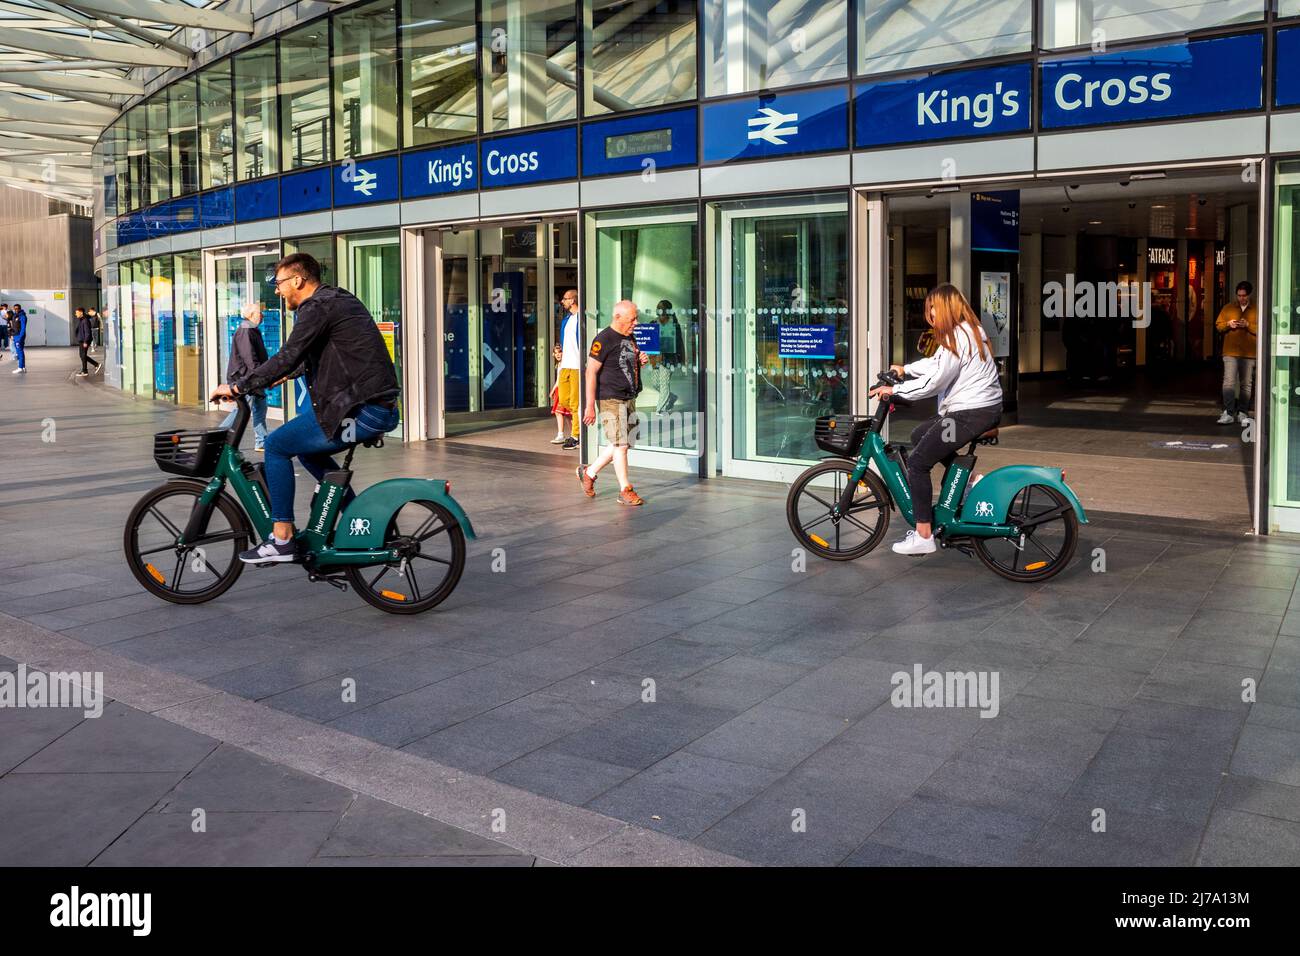 Kings Cross Station London - passengers ride hire bikes out of London Kings Cross Station. London Rental Bikes. Stock Photo